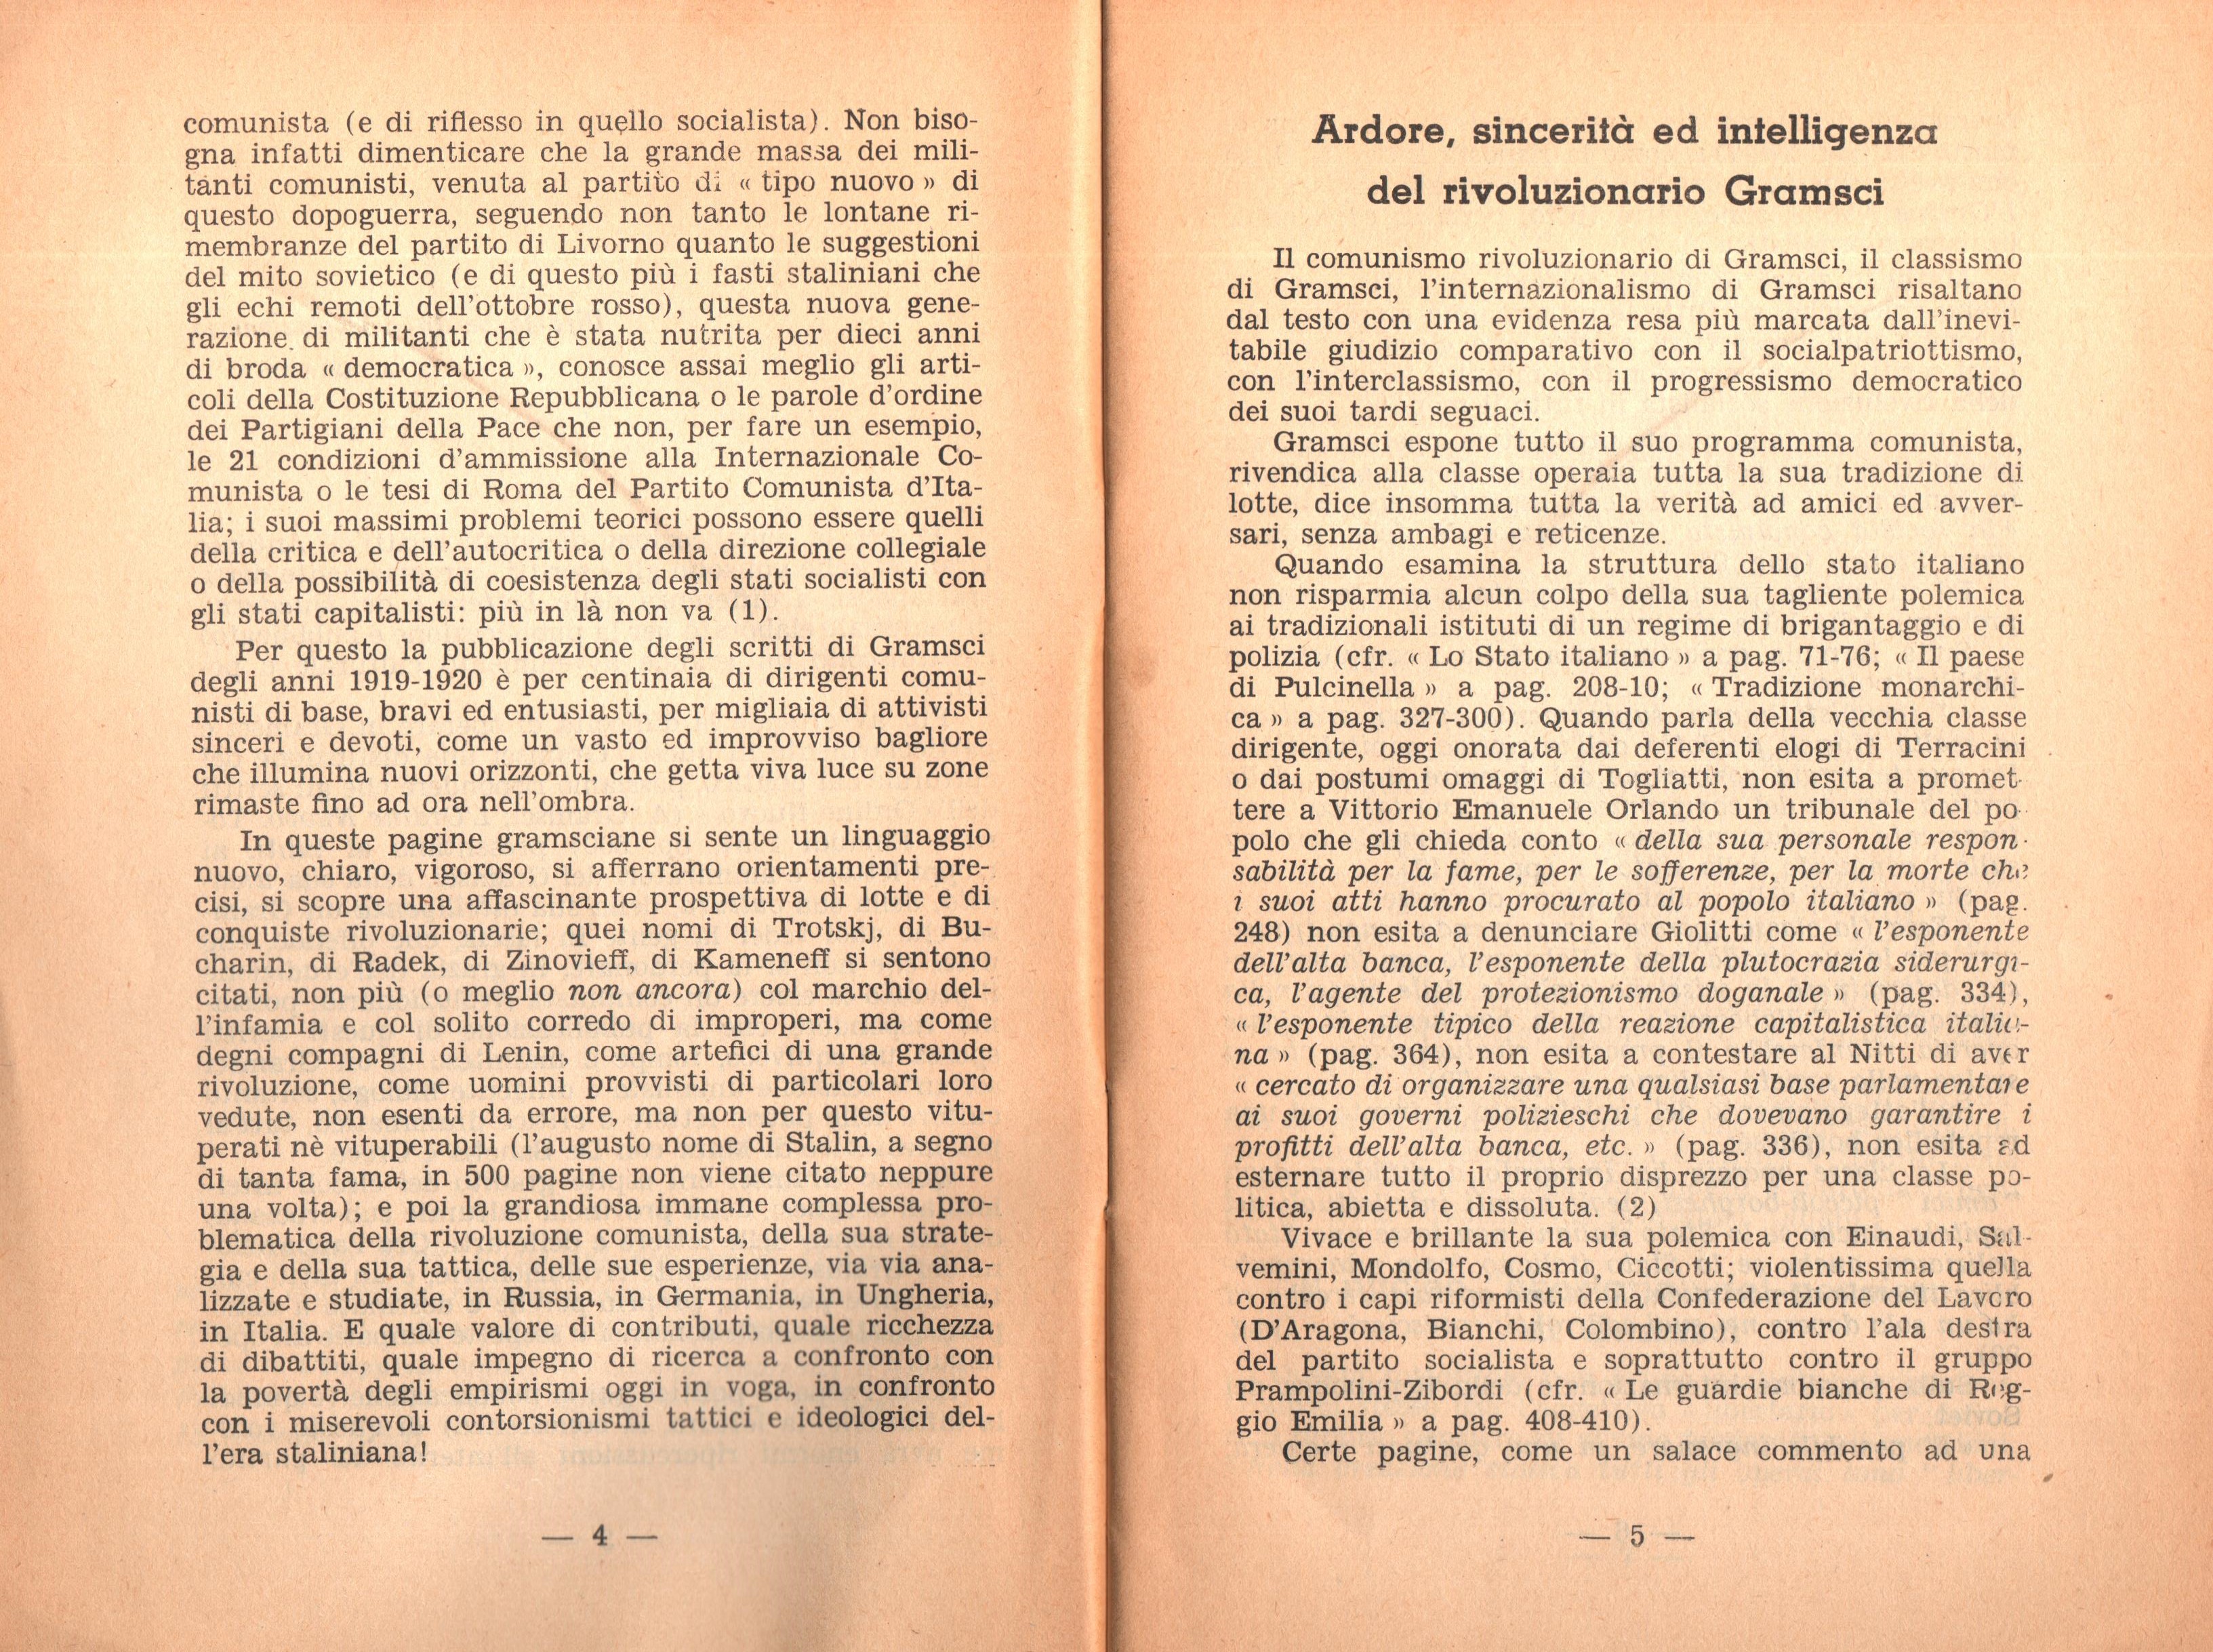 Pier Carlo Masini, Antonio Gramsci - pag. 4